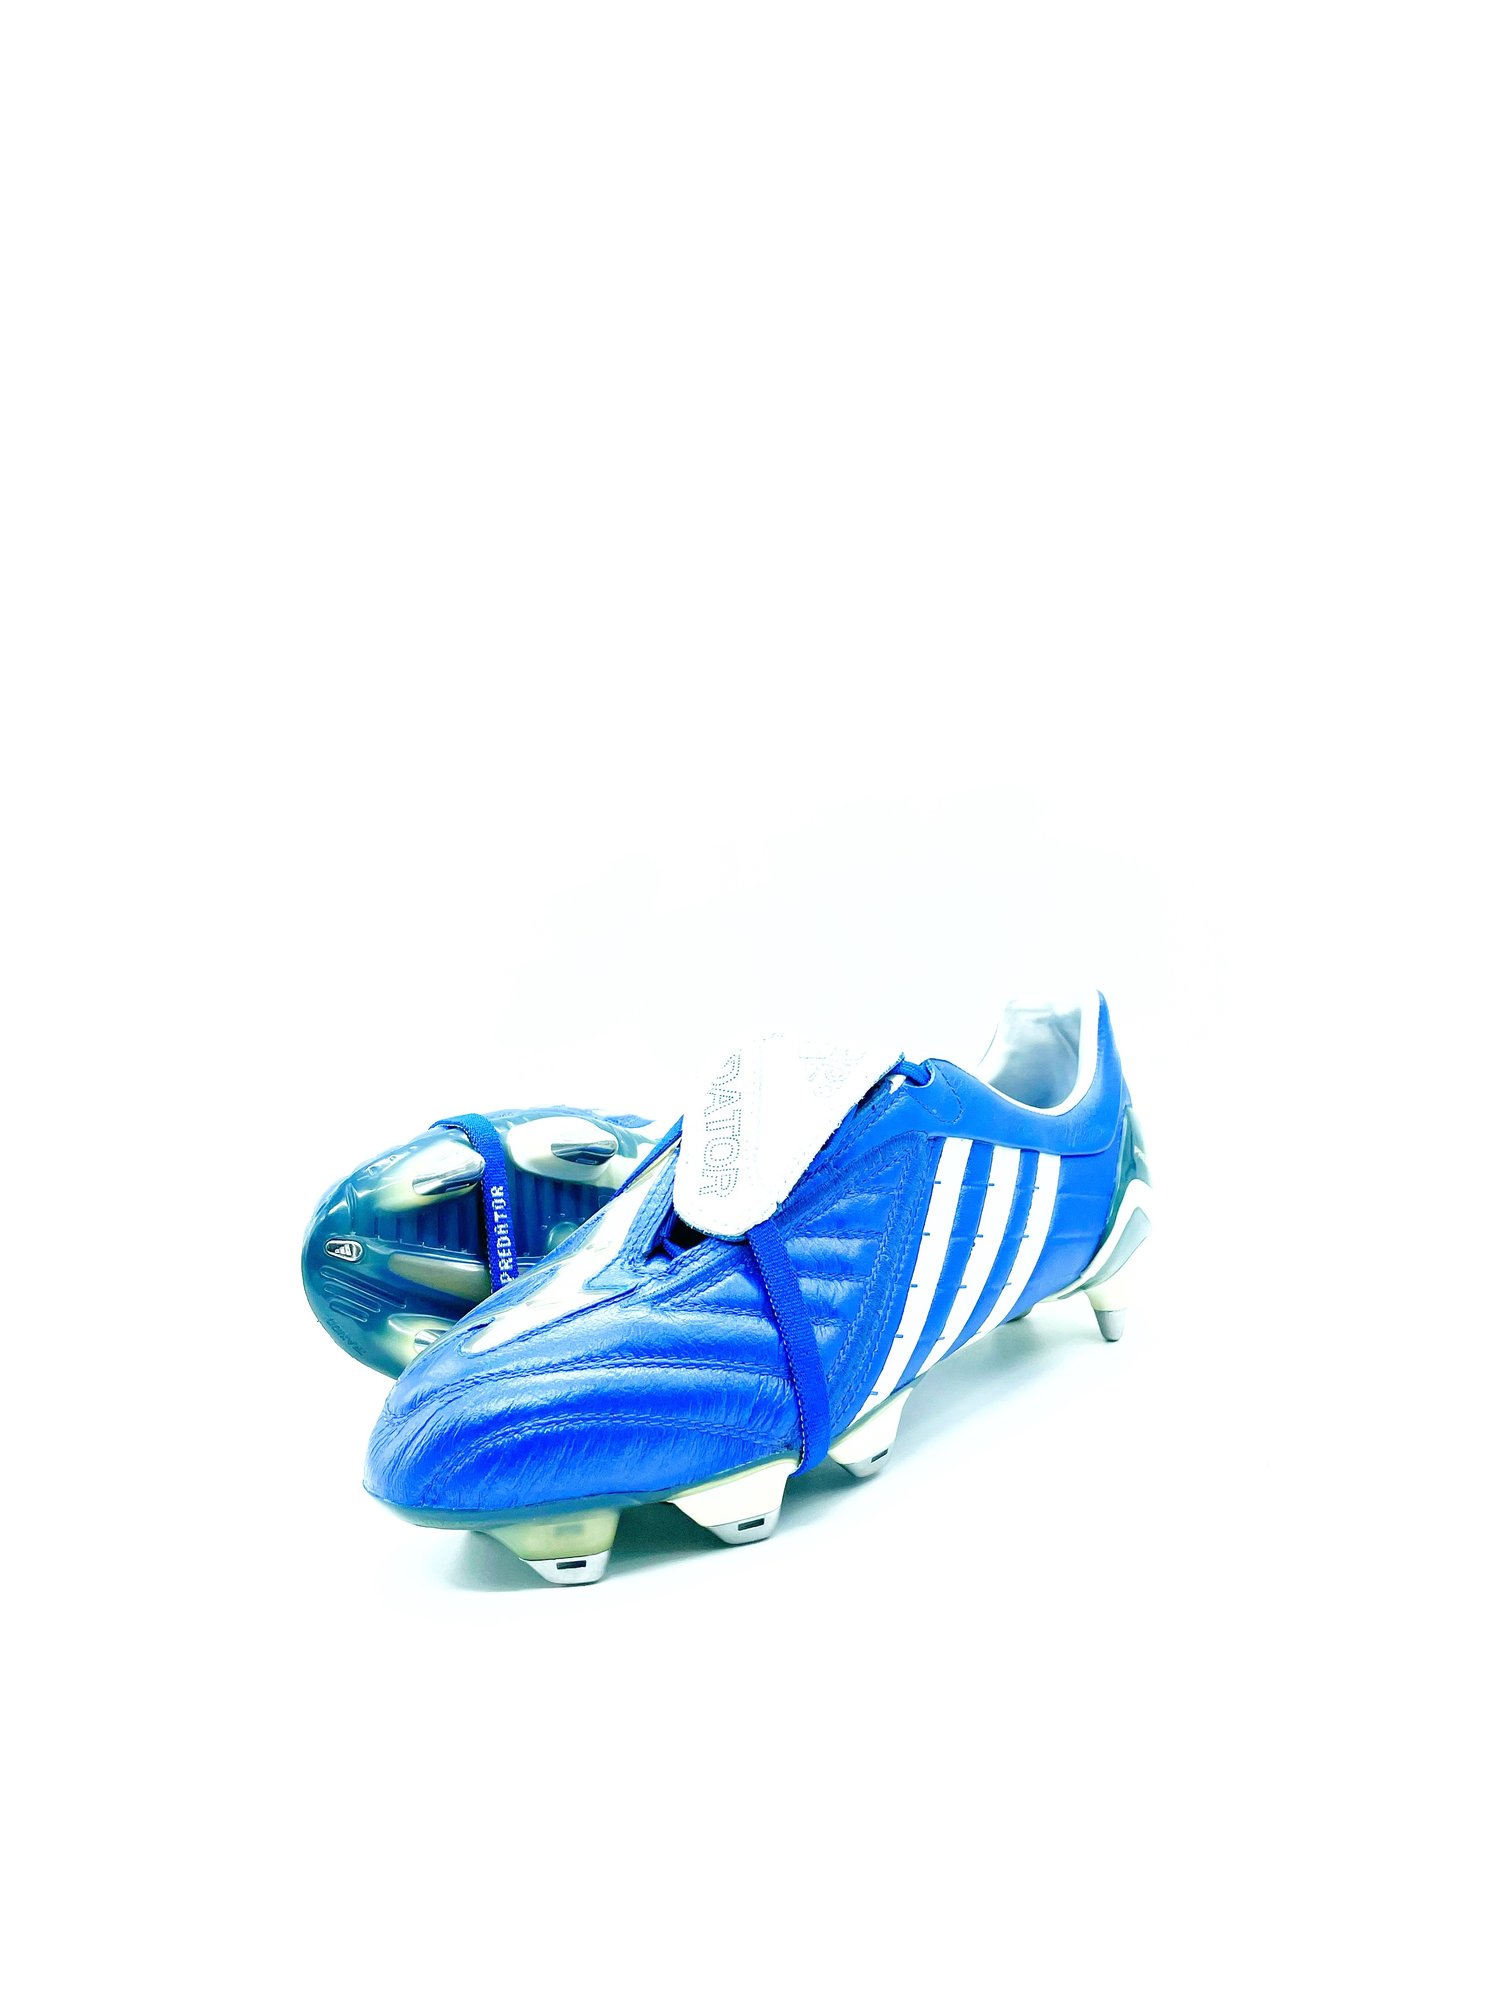 Image of Adidas Predator powerswerve Blue FG or SG 